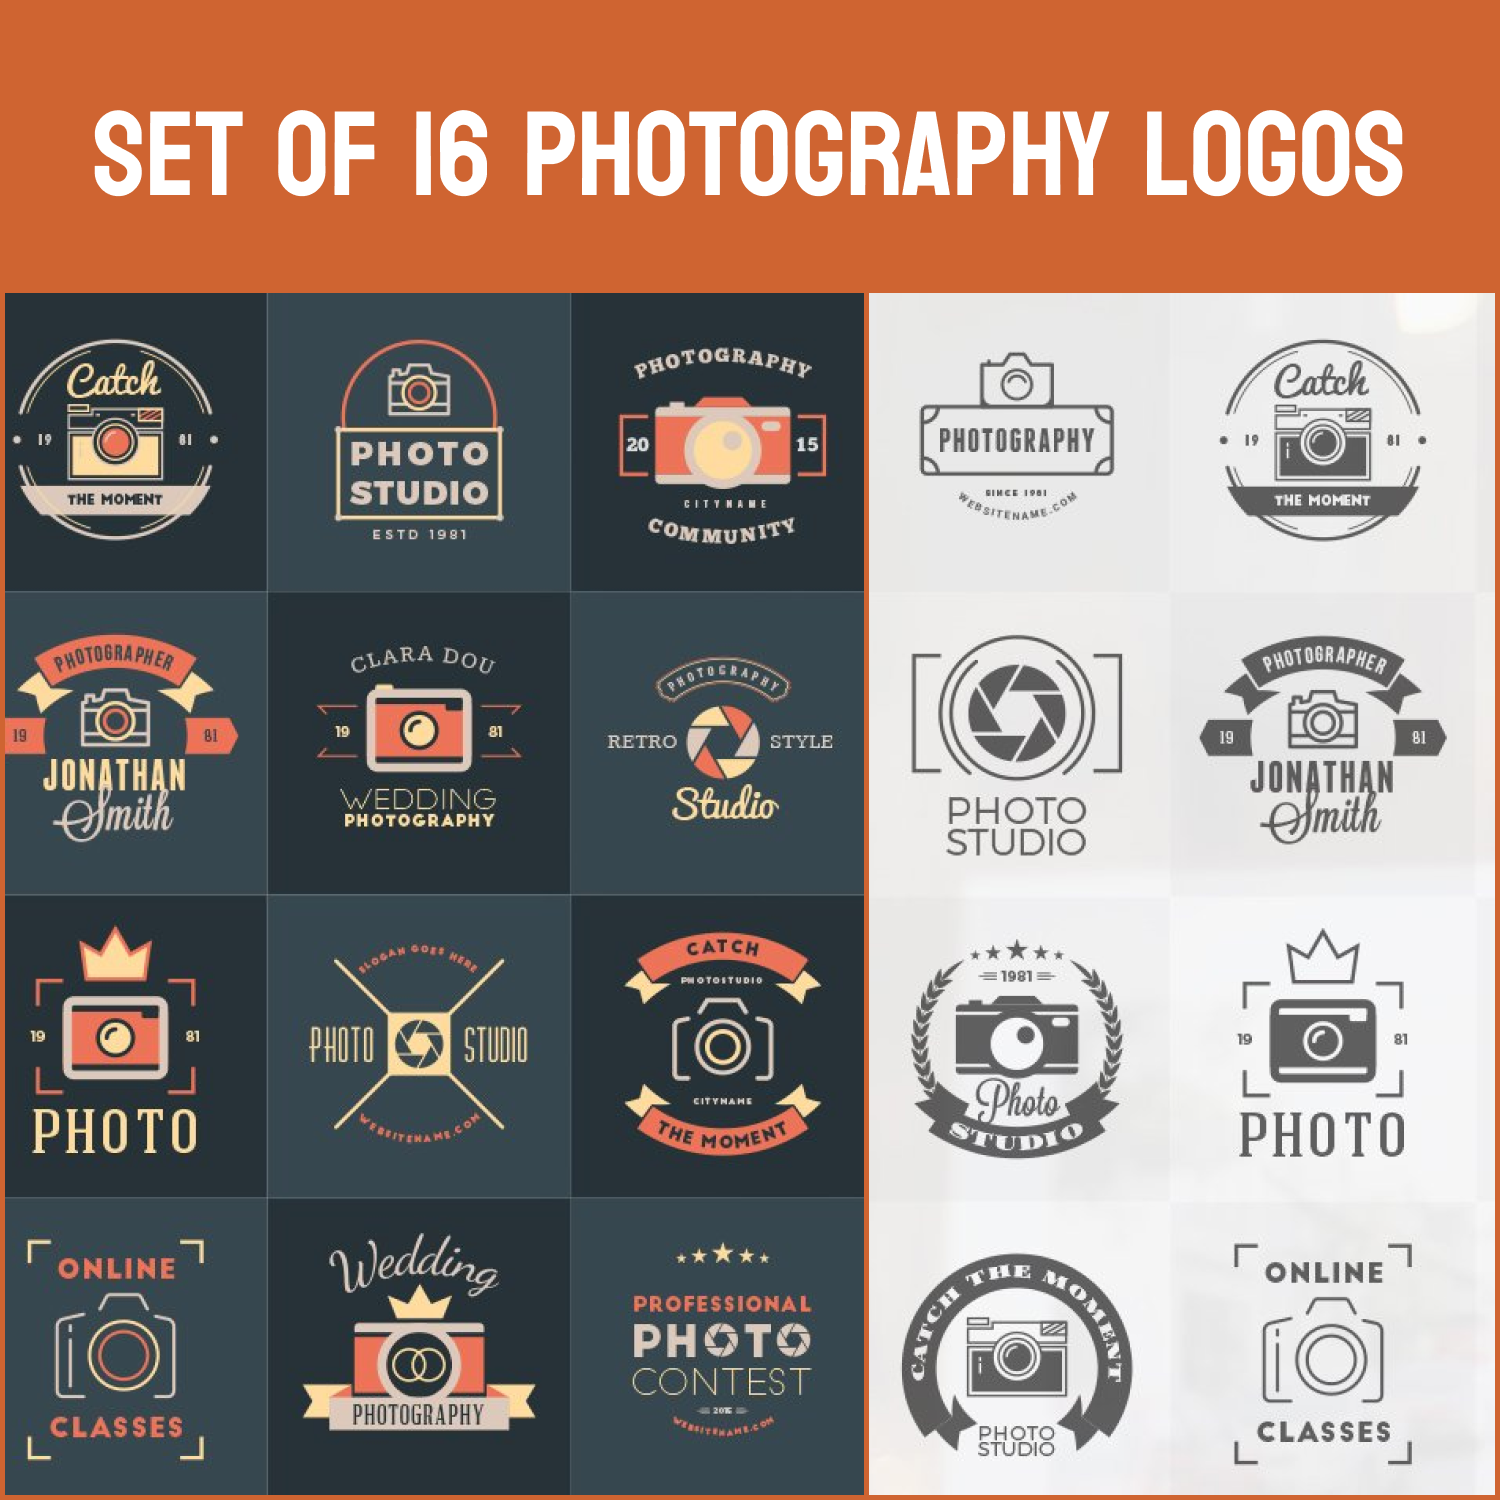 Preview set photography logos.